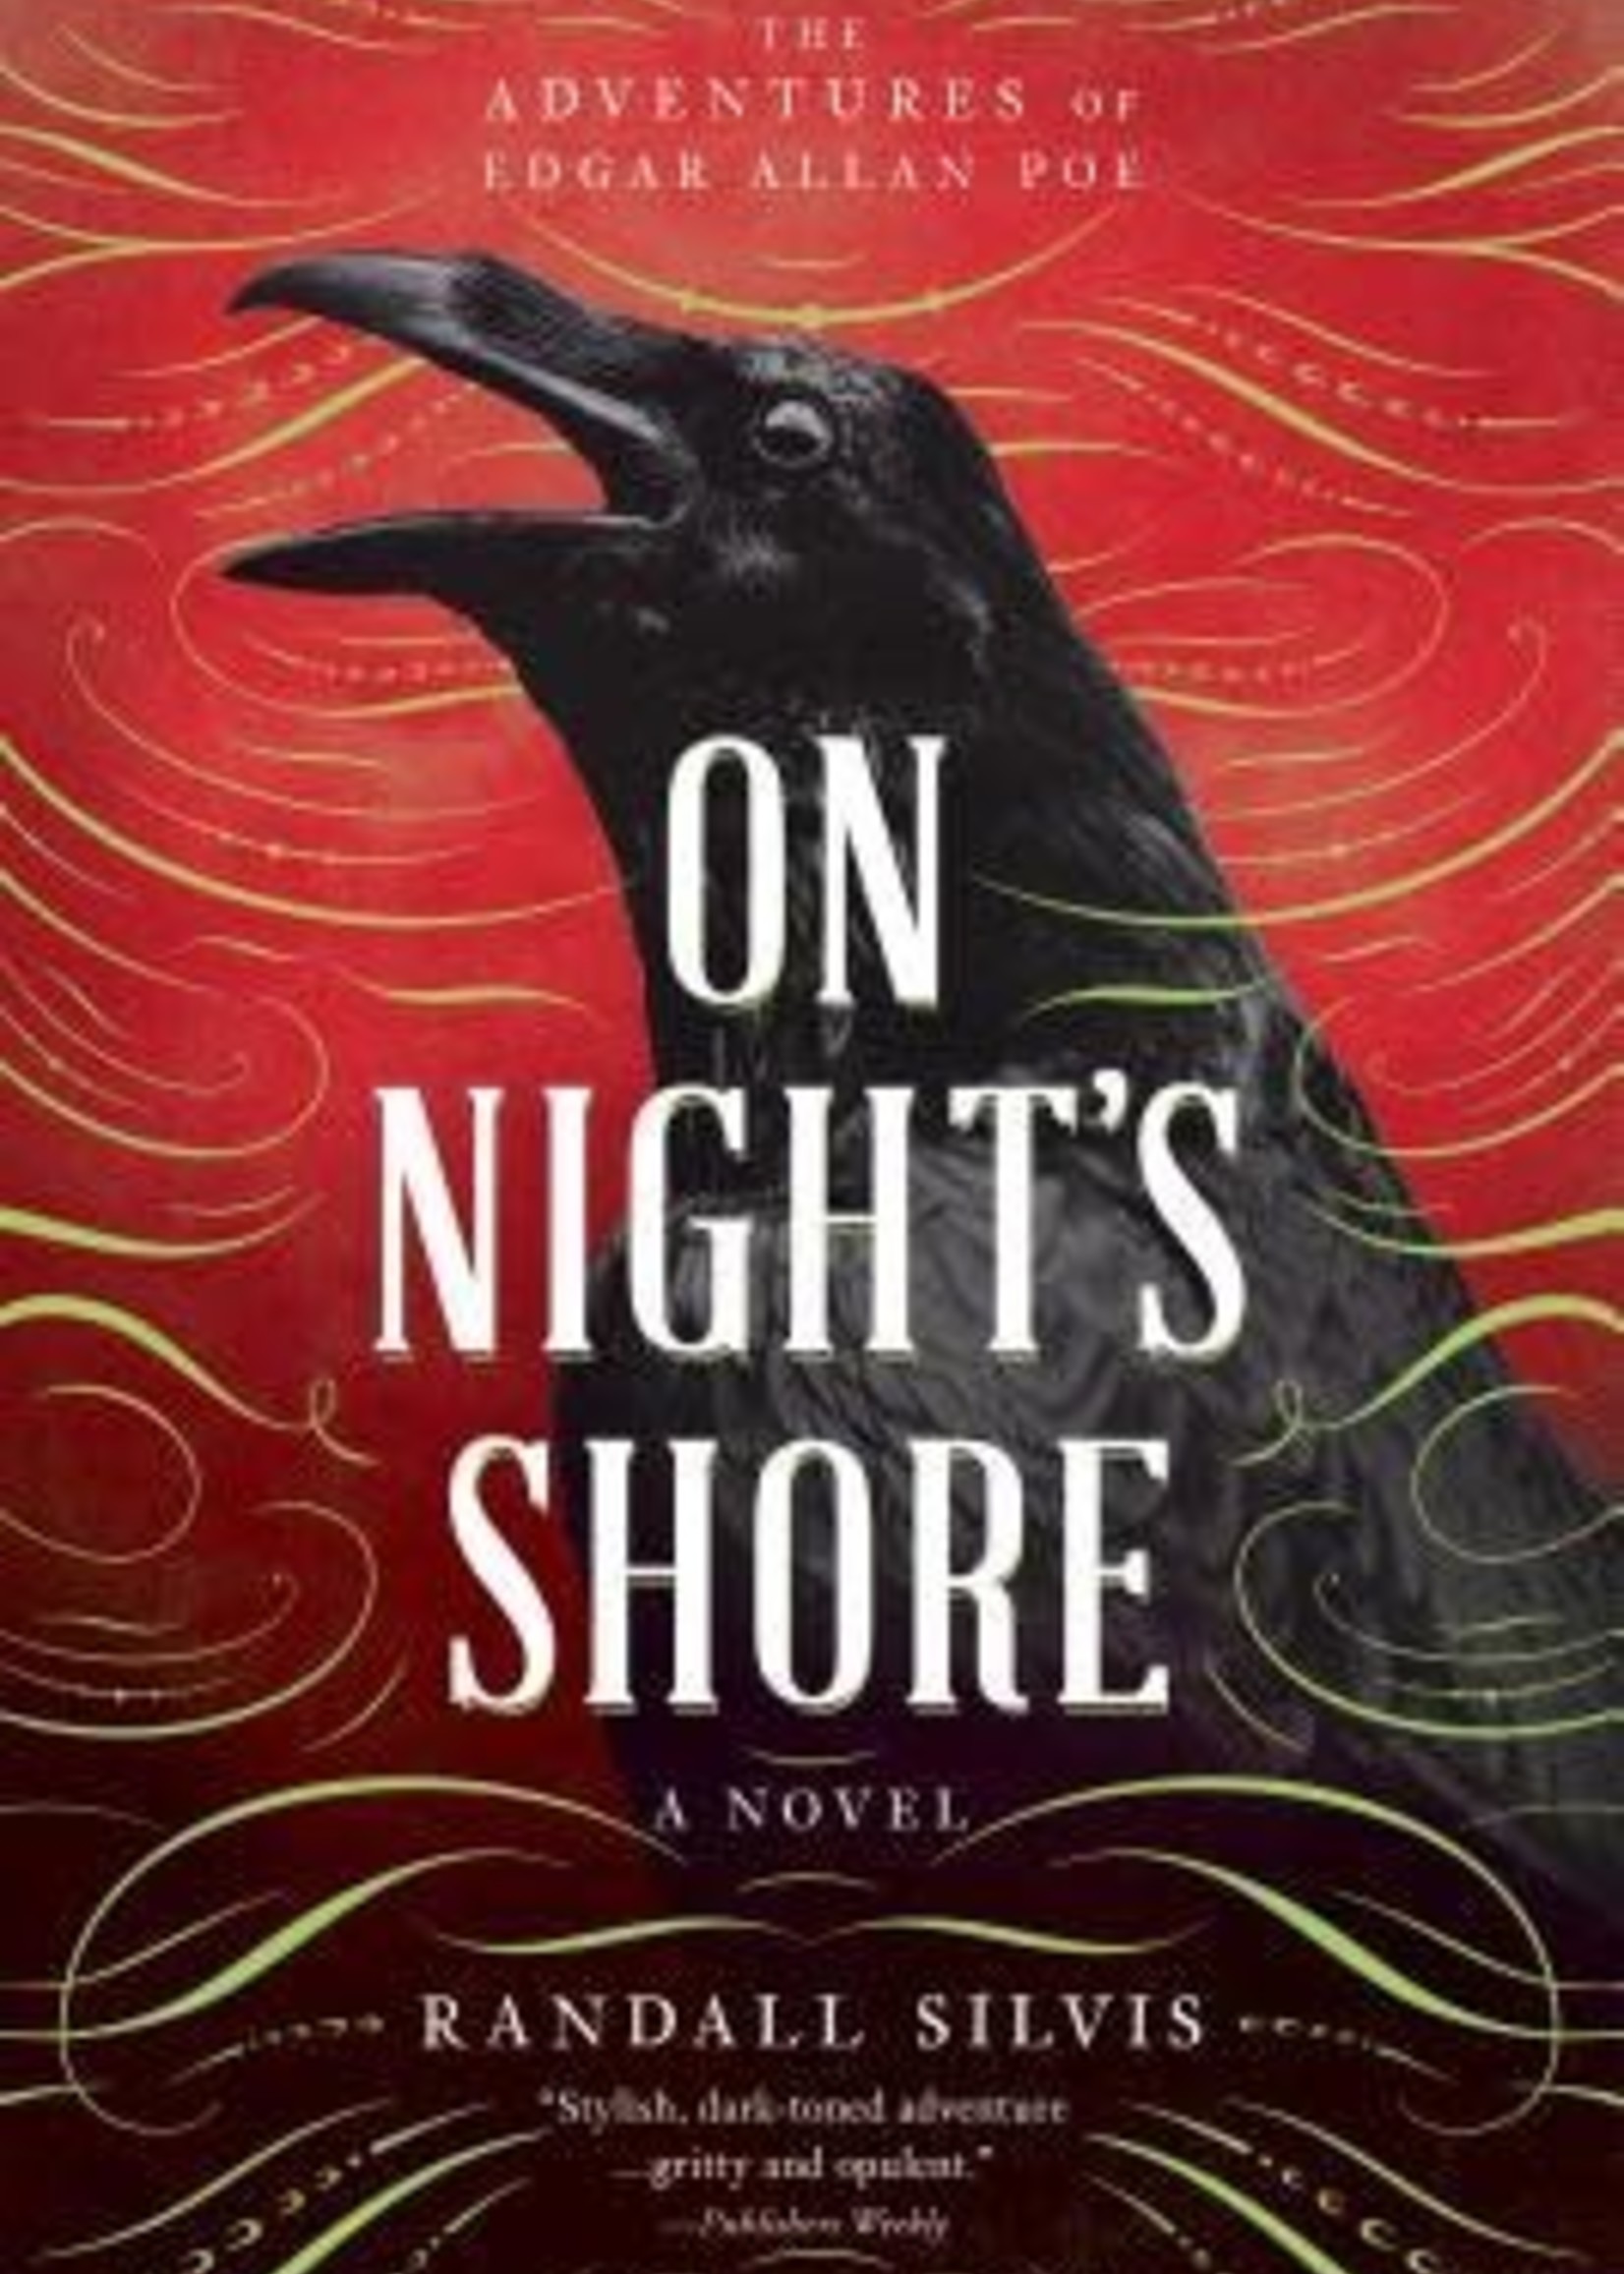 On Night's Shore (Edgar Allan Poe #1) by Randall Silvis